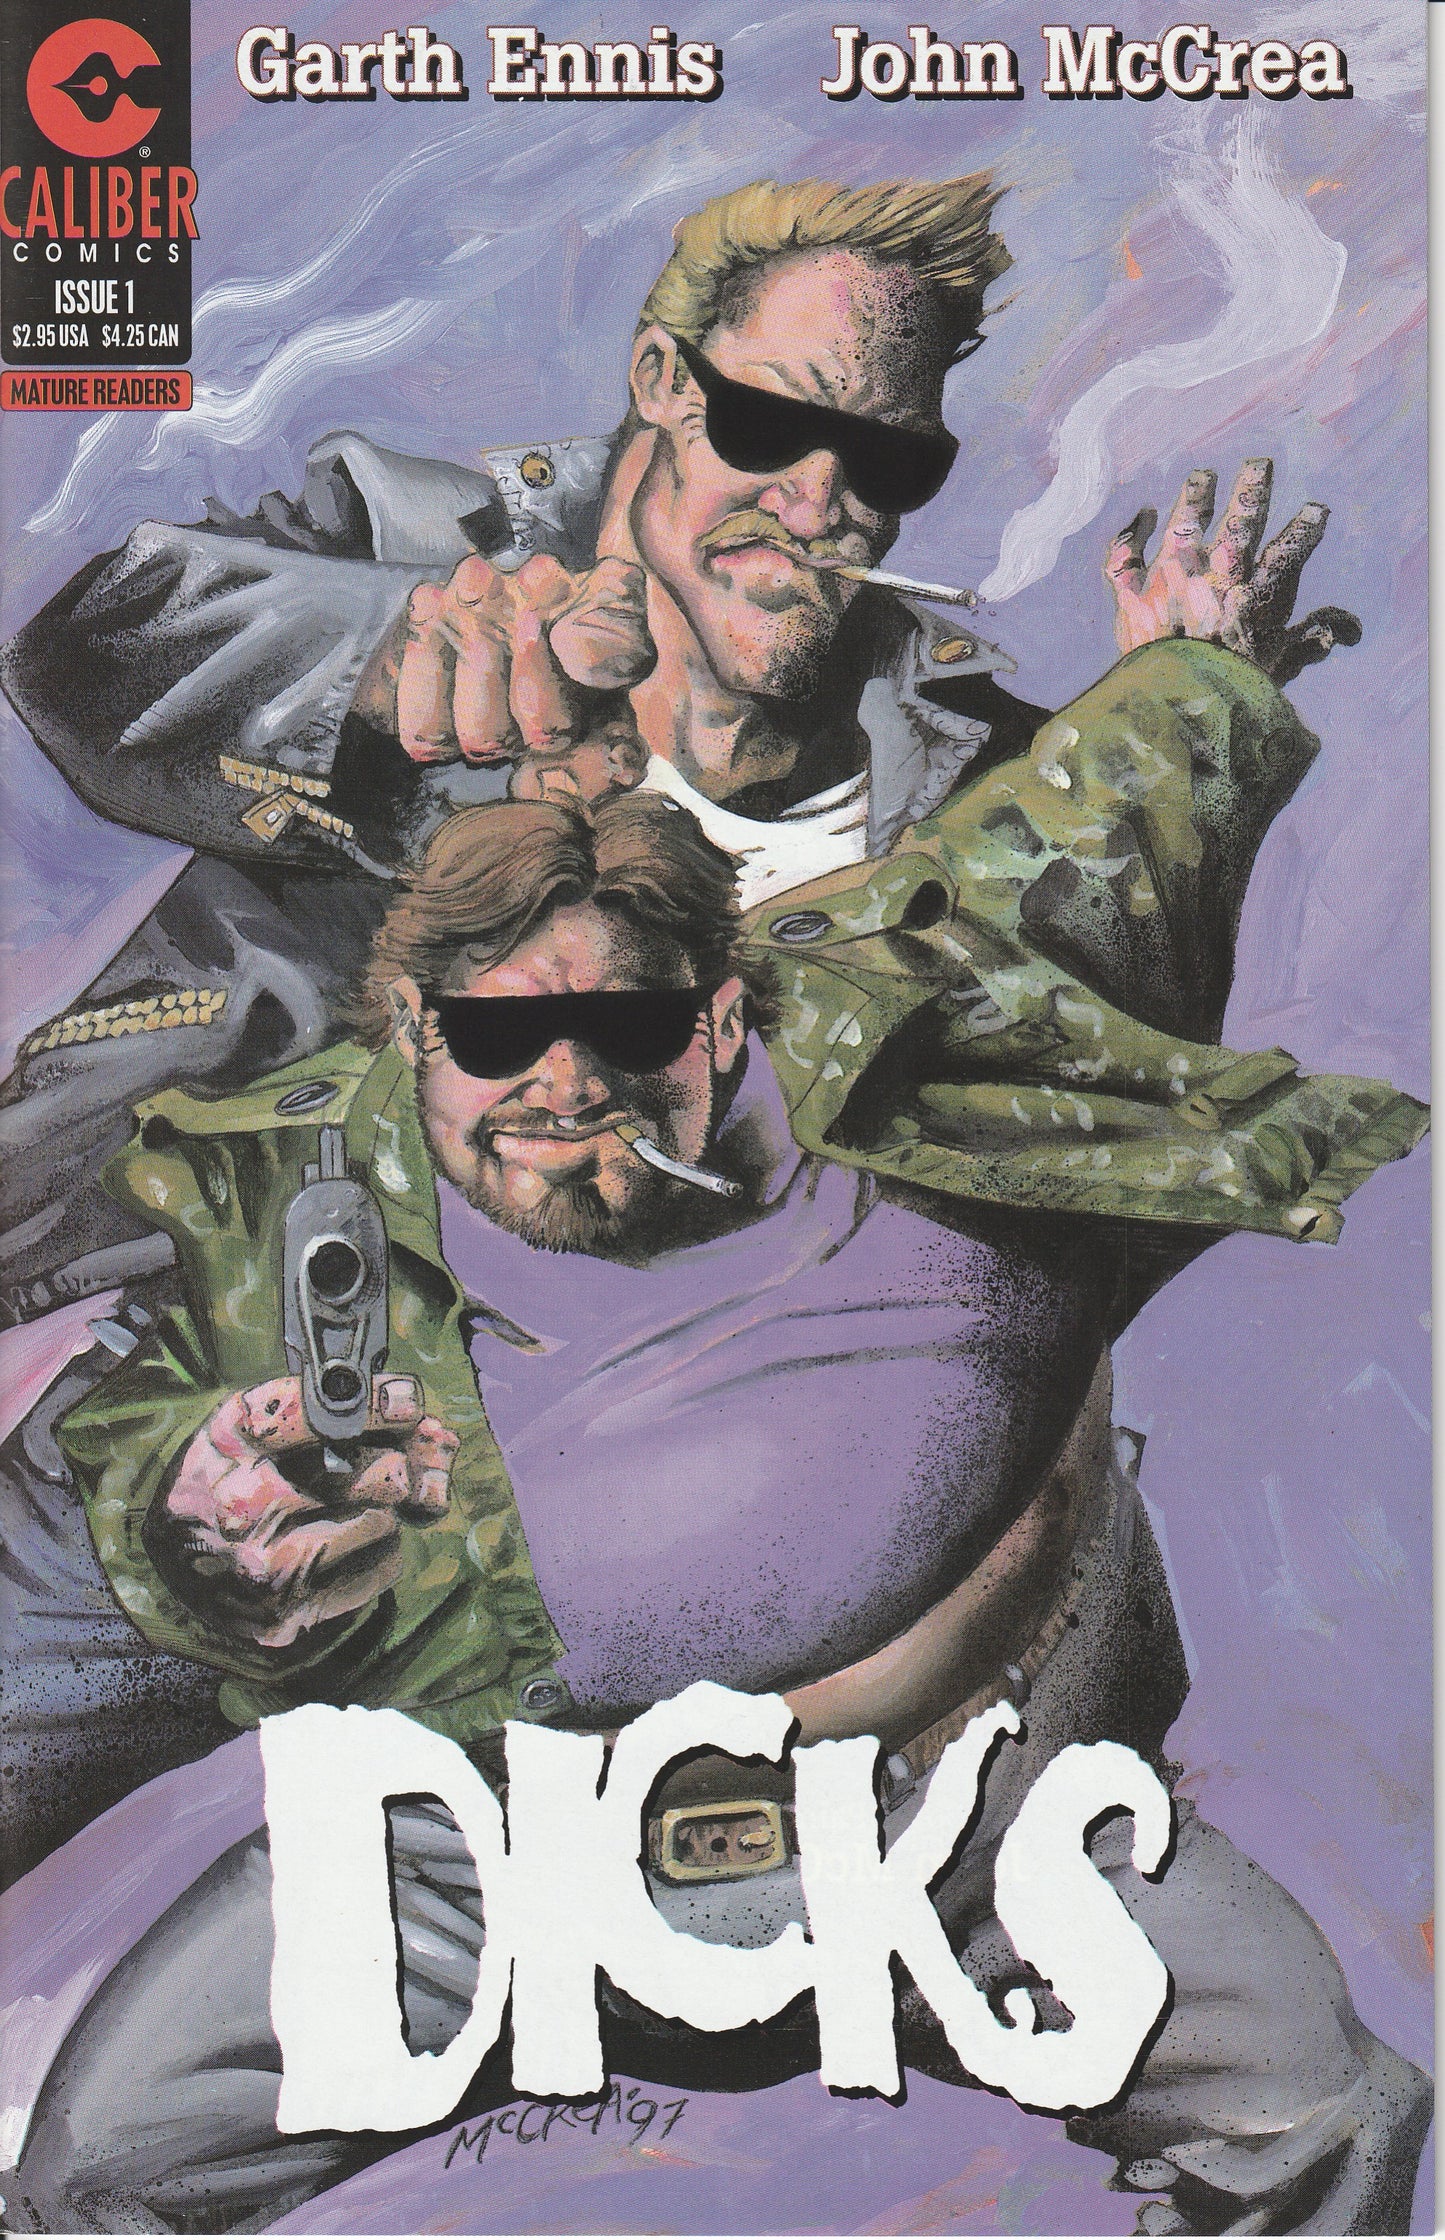 Dicks 1-4 Complete Set * Garth Ennis - John McCrea * Caliber Comics